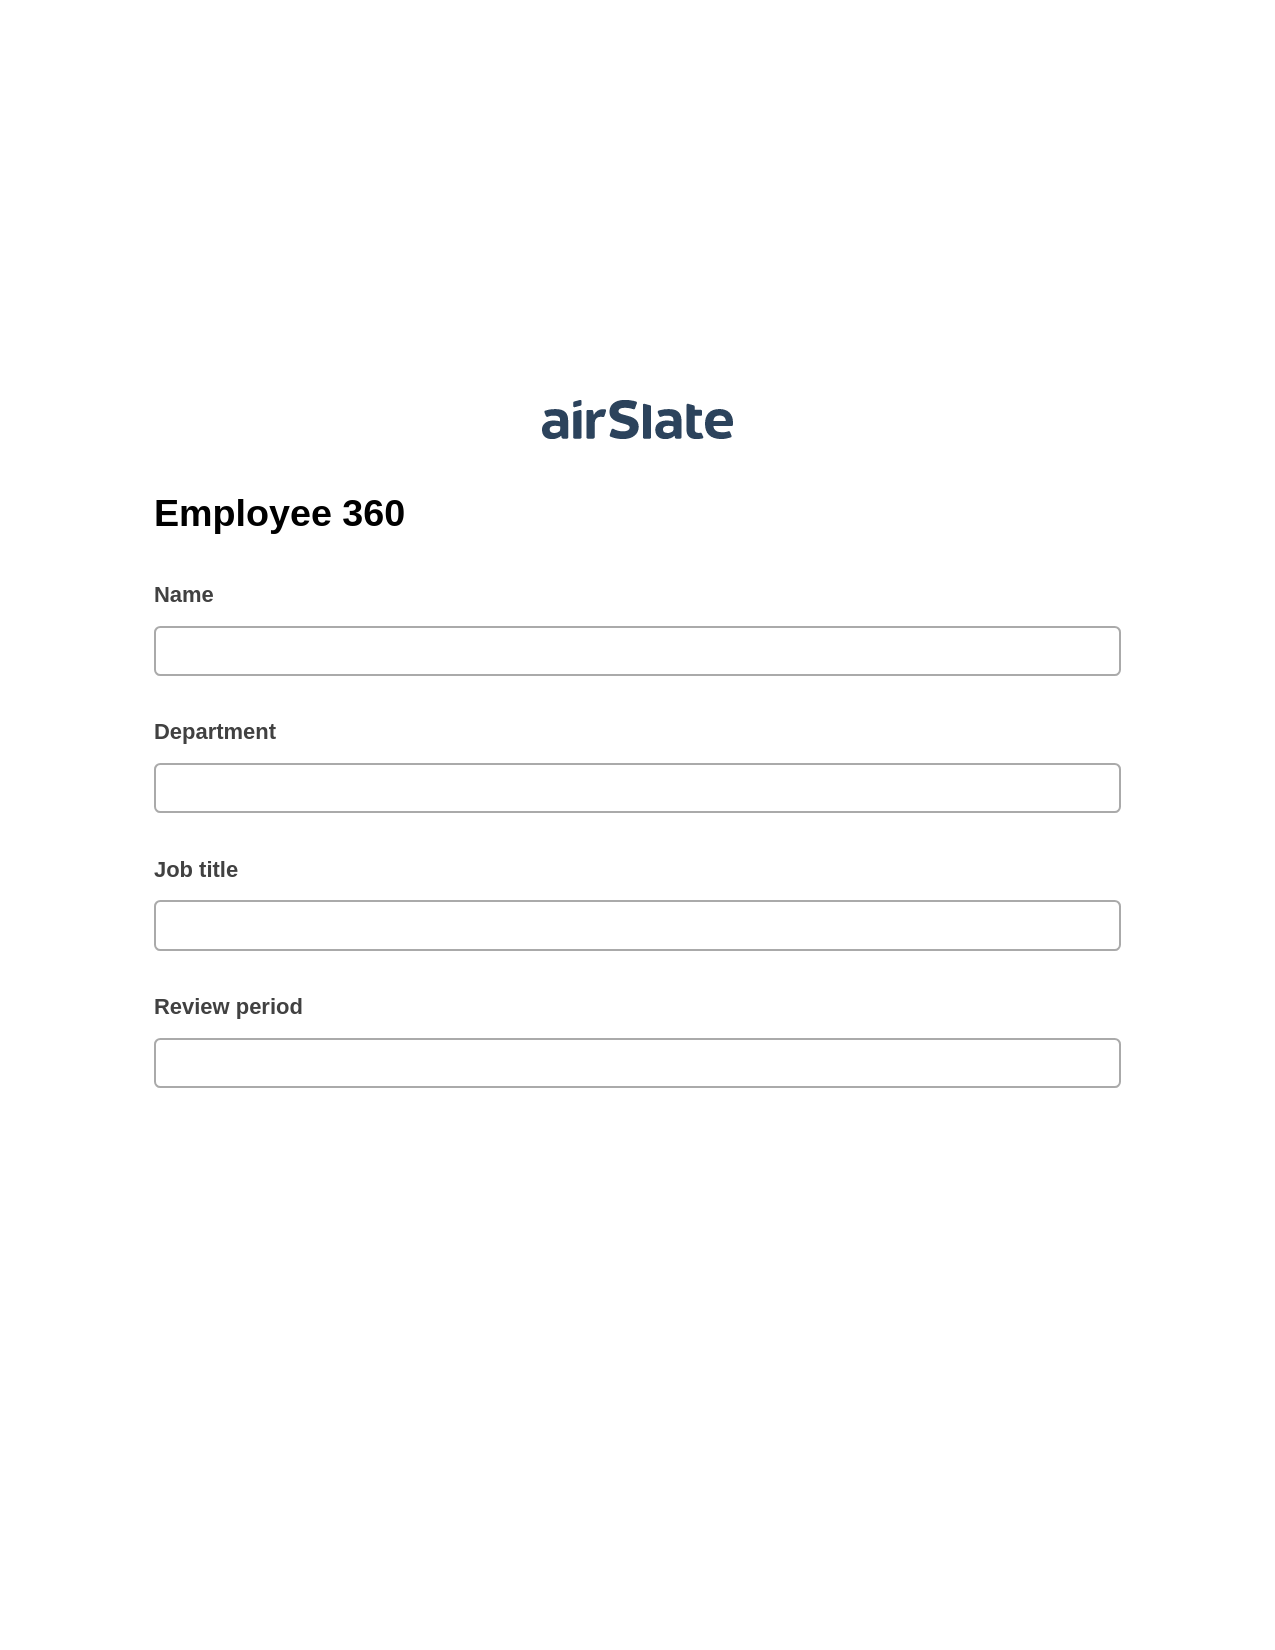 Employee 360 Pre-fill from MySQL Bot, Remove Slate Bot, Post-finish Document Bot